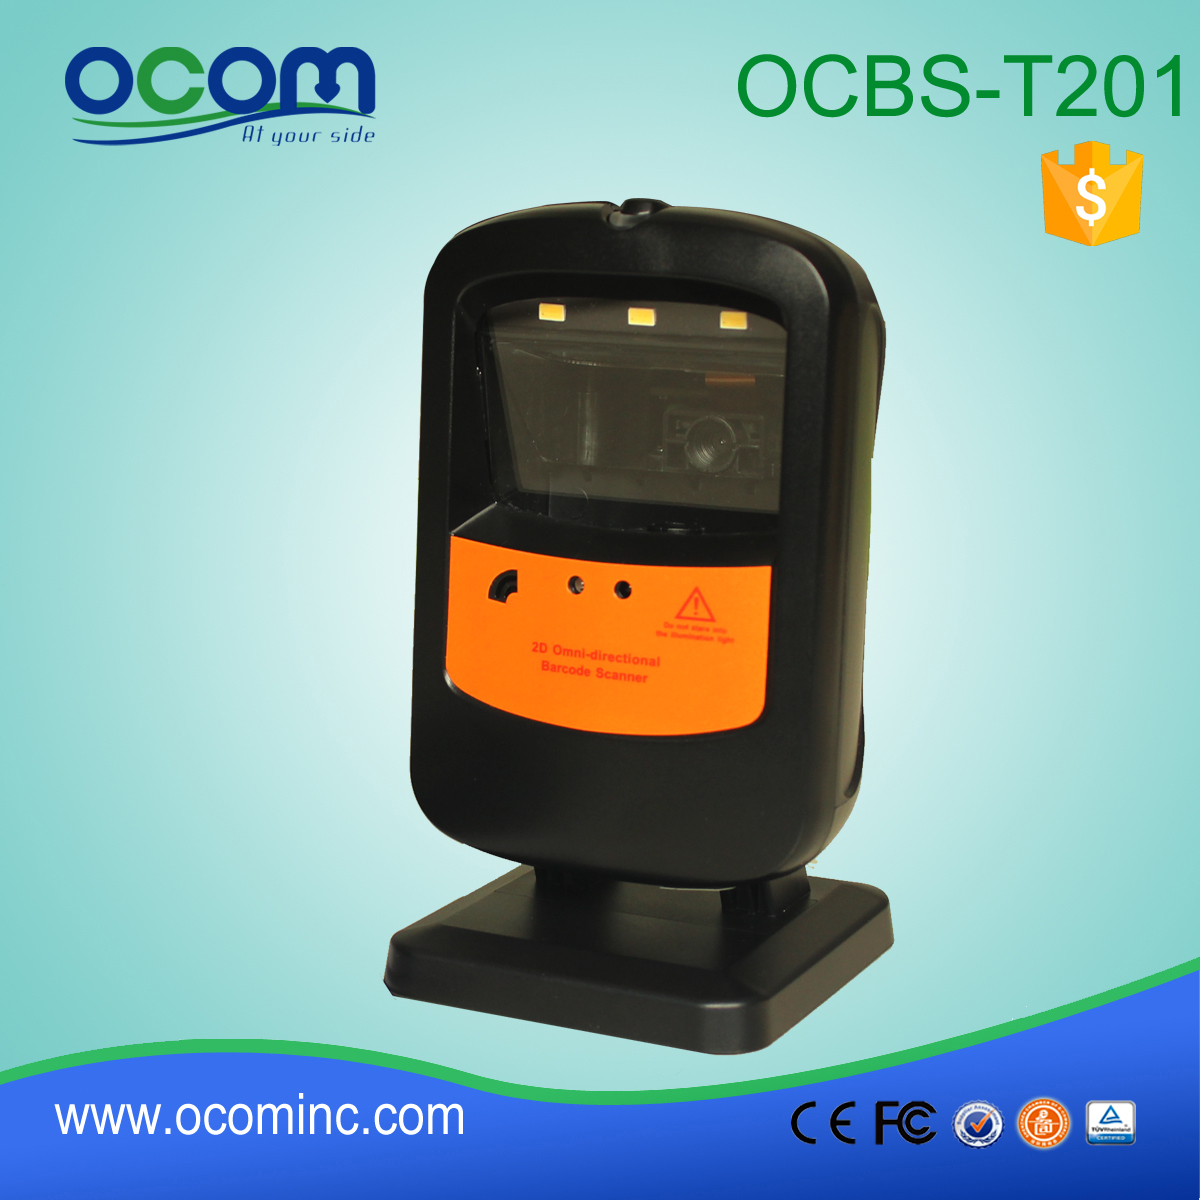 Freisprecheinrichtung 2d Barcodescanner destop for Imaging (OCBS-T201)